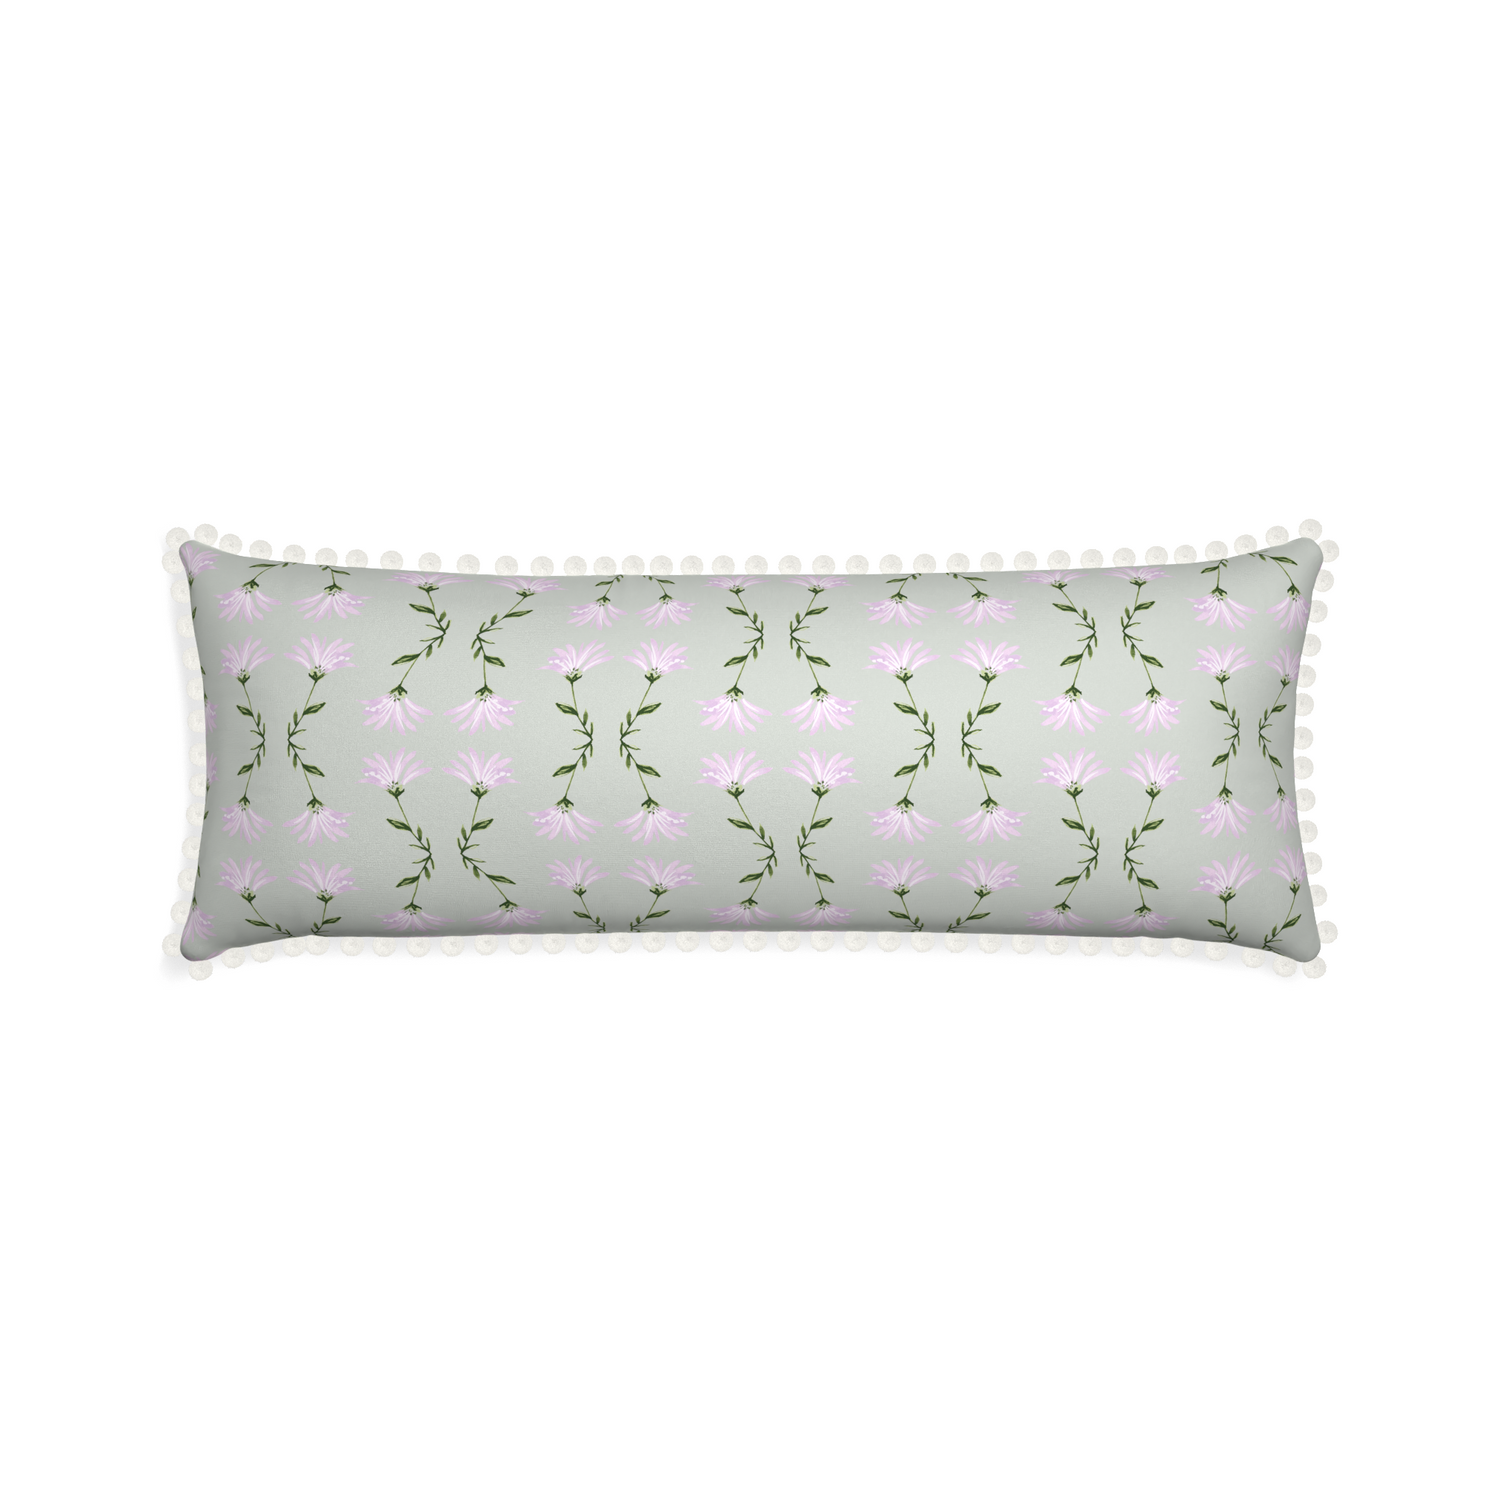 Xl-lumbar marina sage custom pillow with snow pom pom on white background